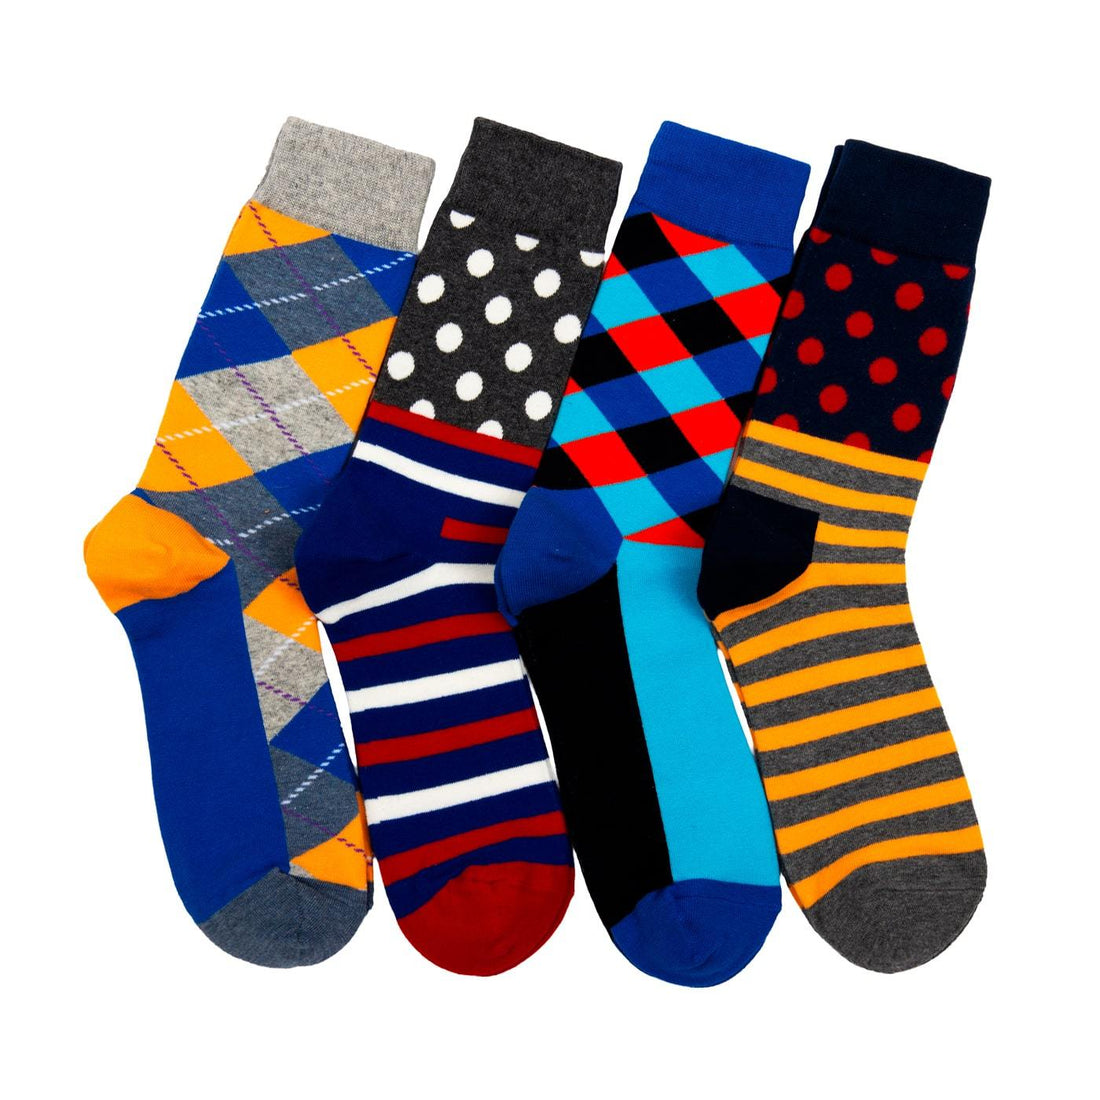 Men's fashionable colorful socks